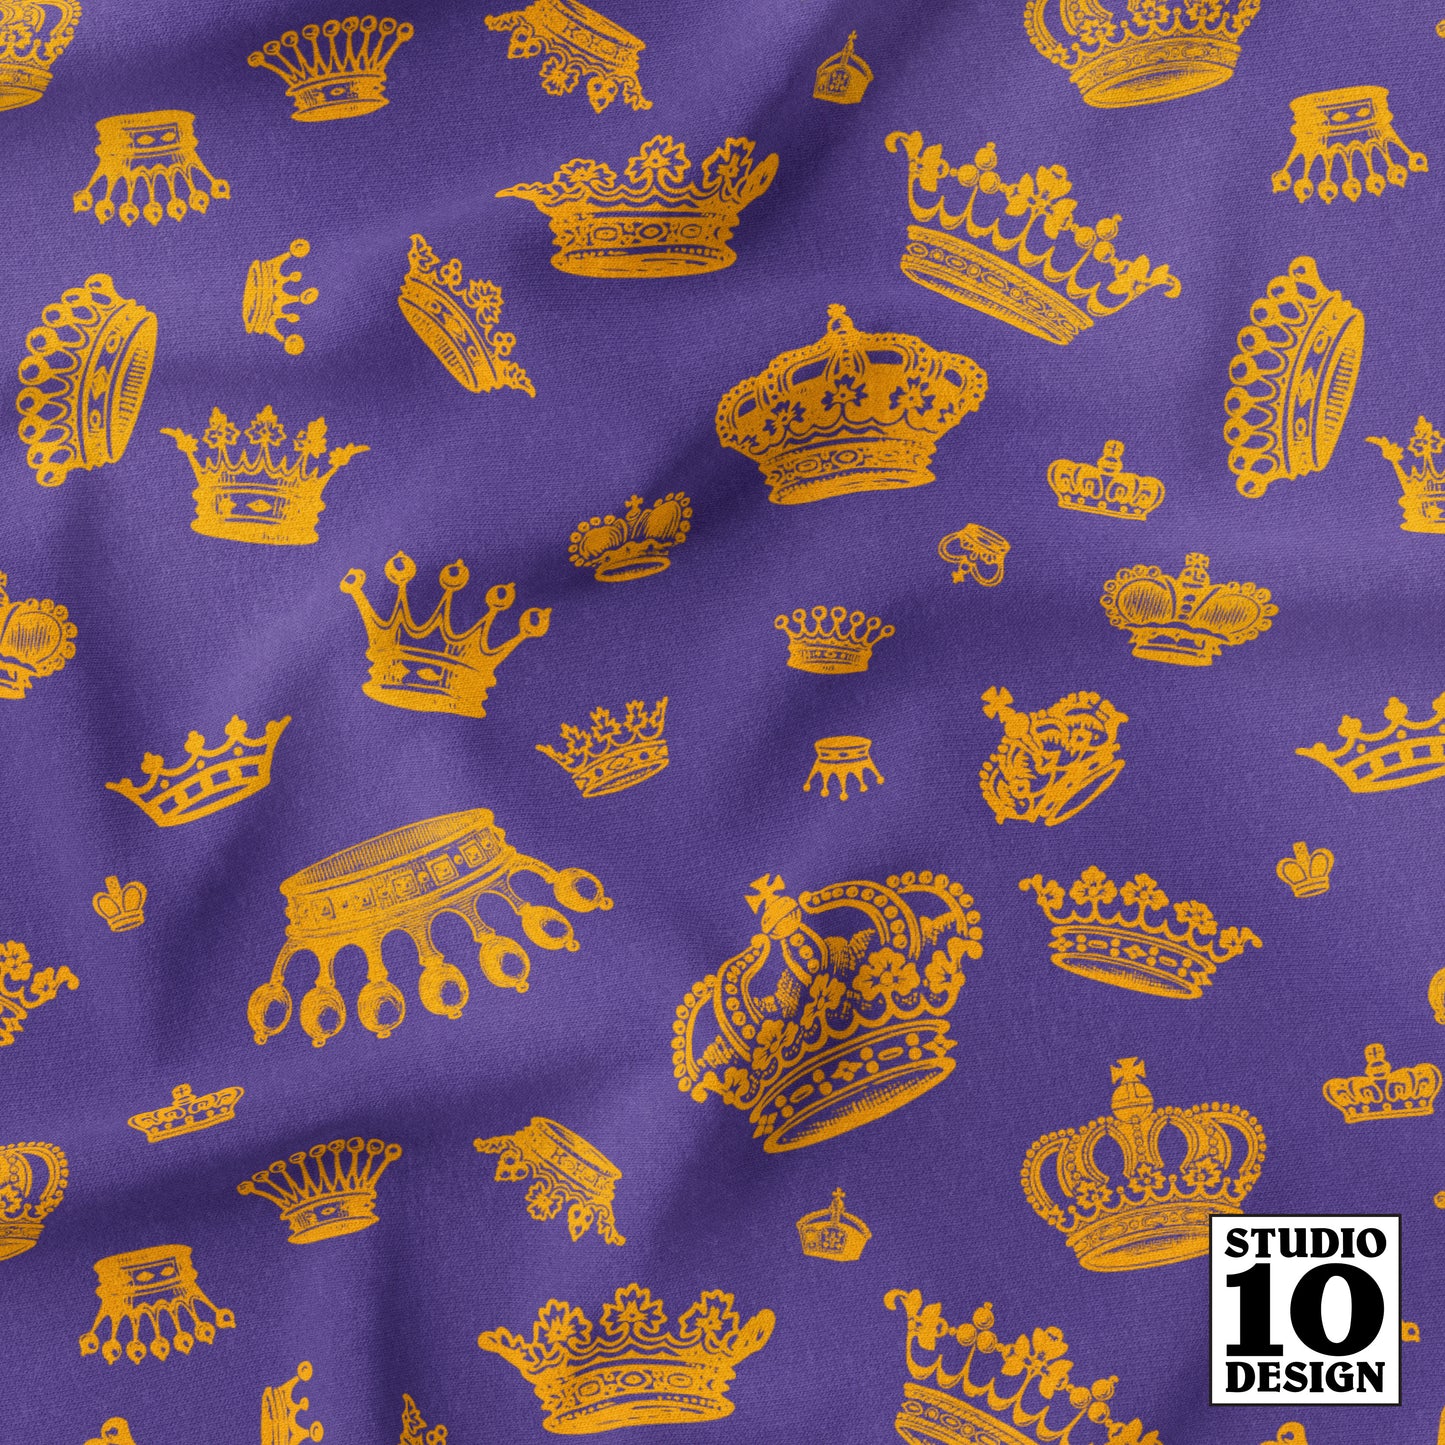 Royal Crowns Marigold+Grape Printed Fabric by Studio Ten Design